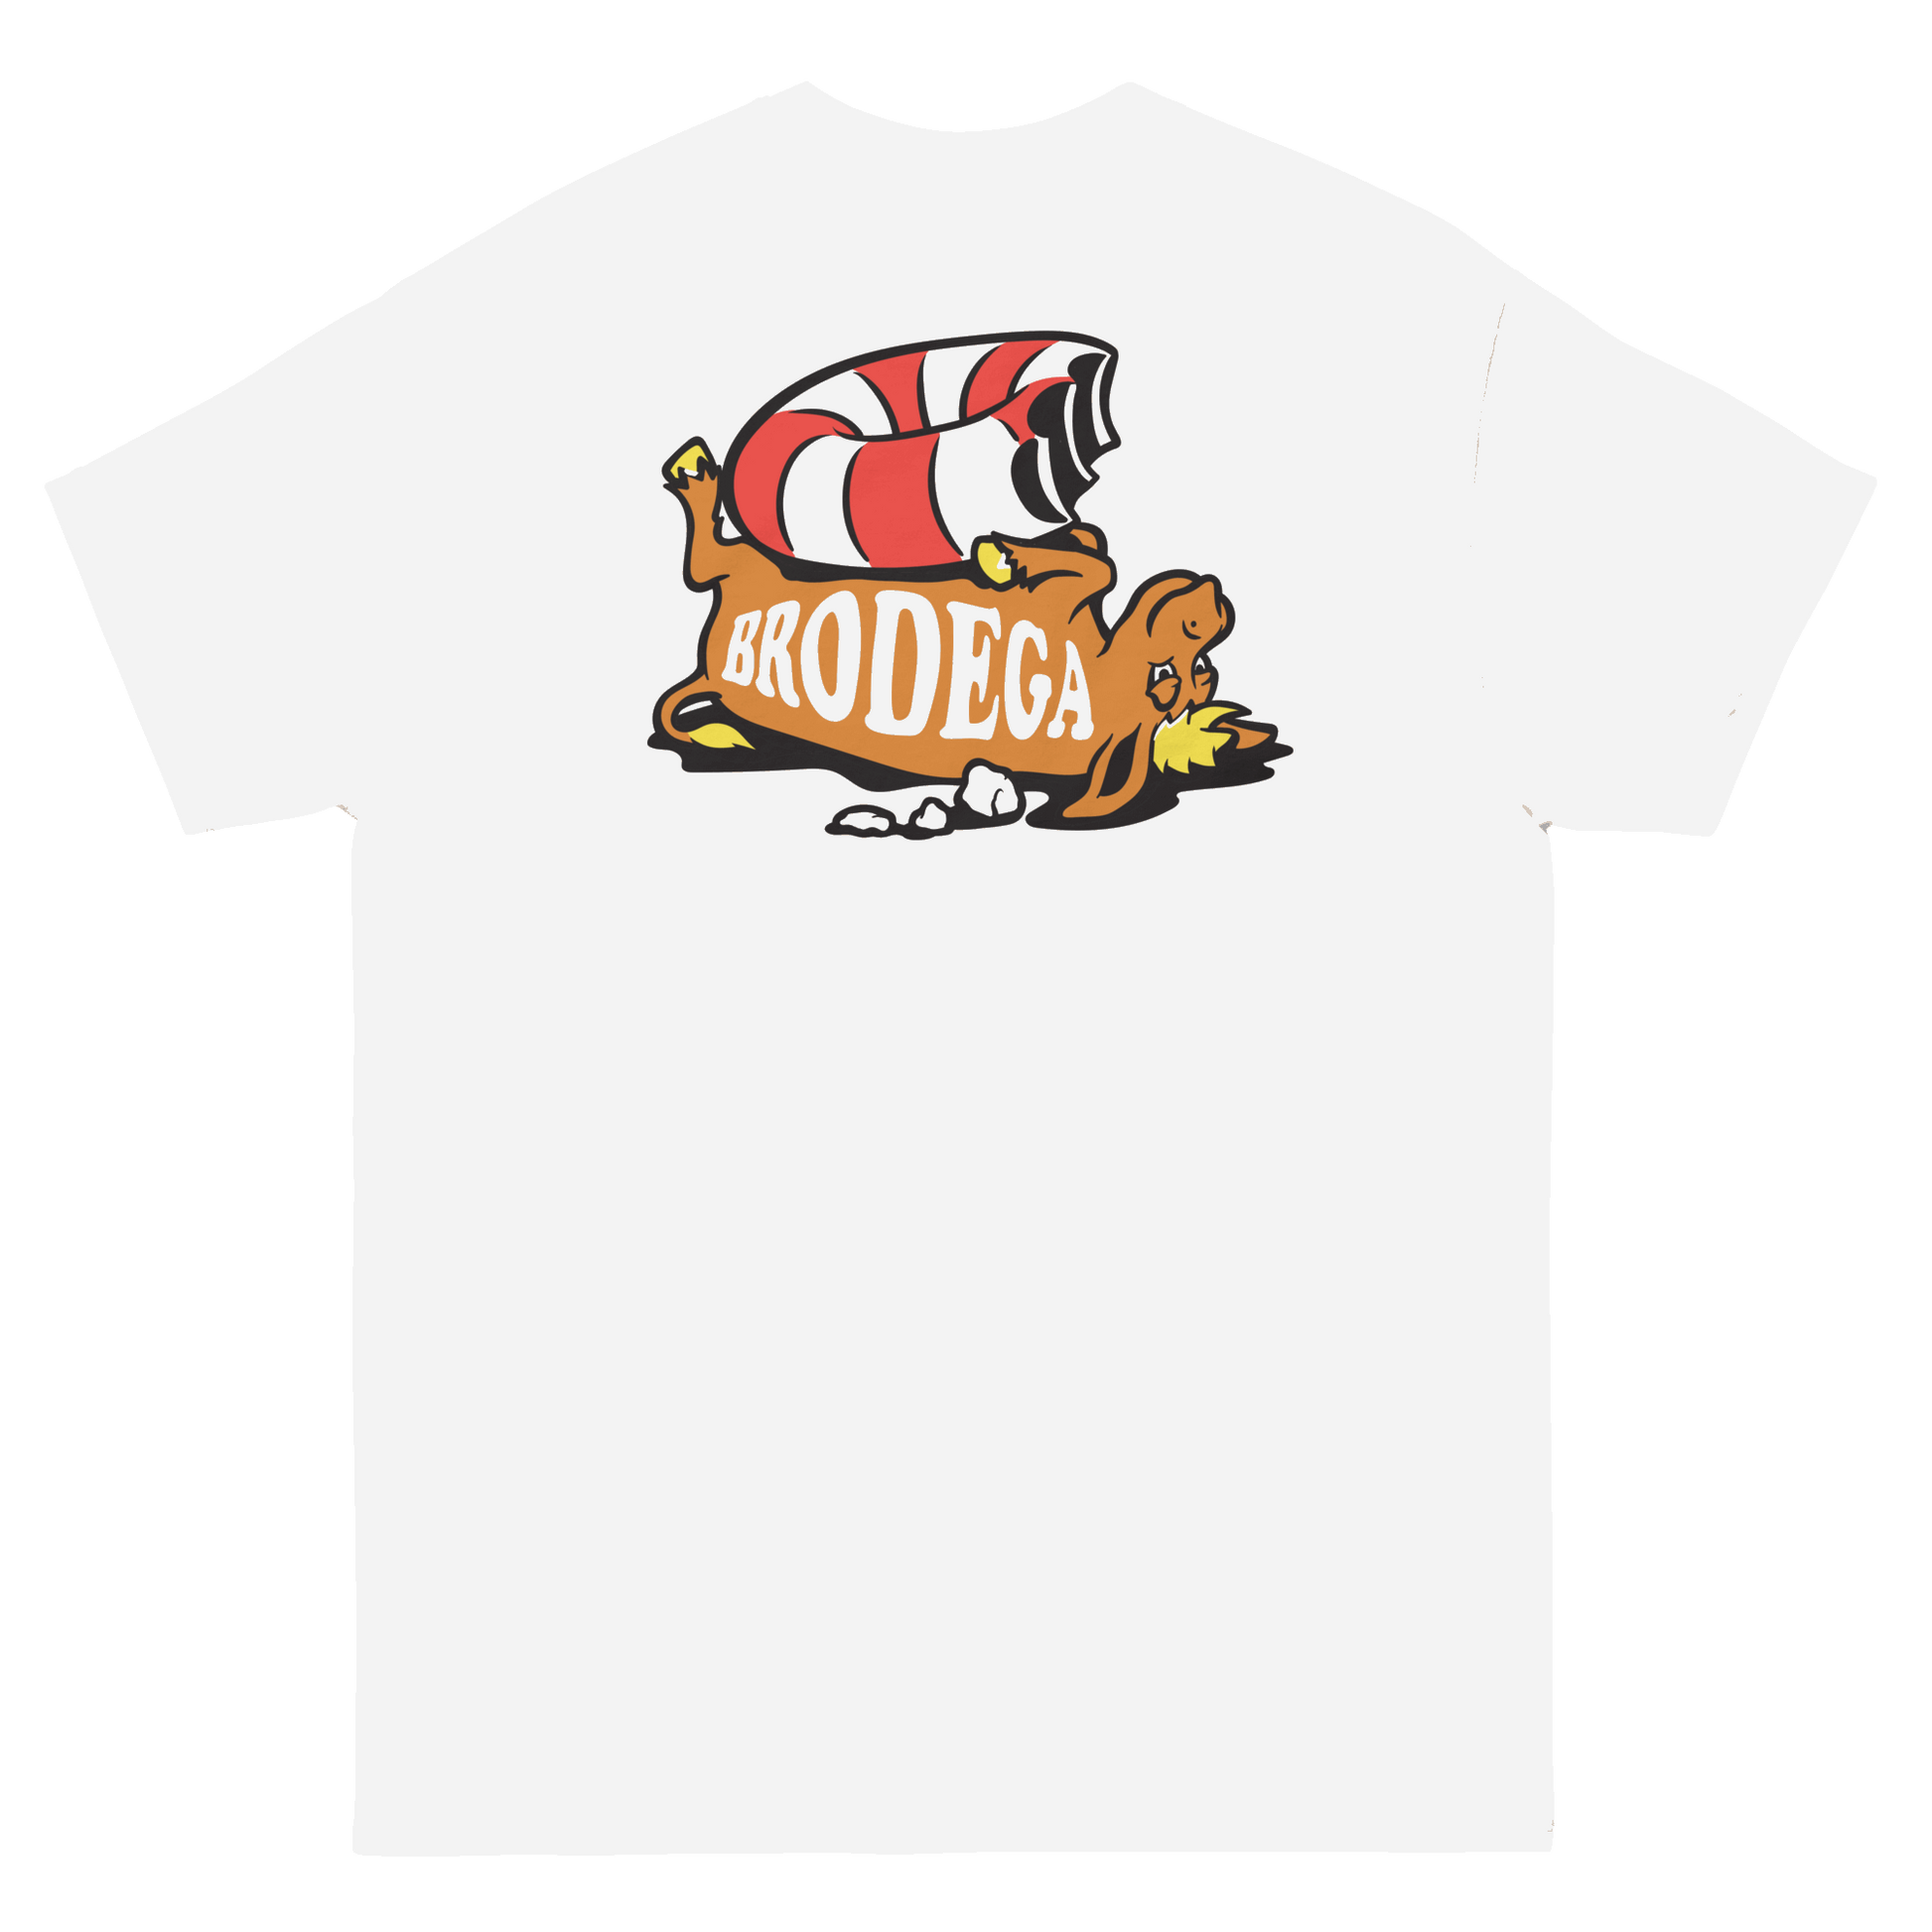 Dönish / T-Shirt - Brodega Skateboards